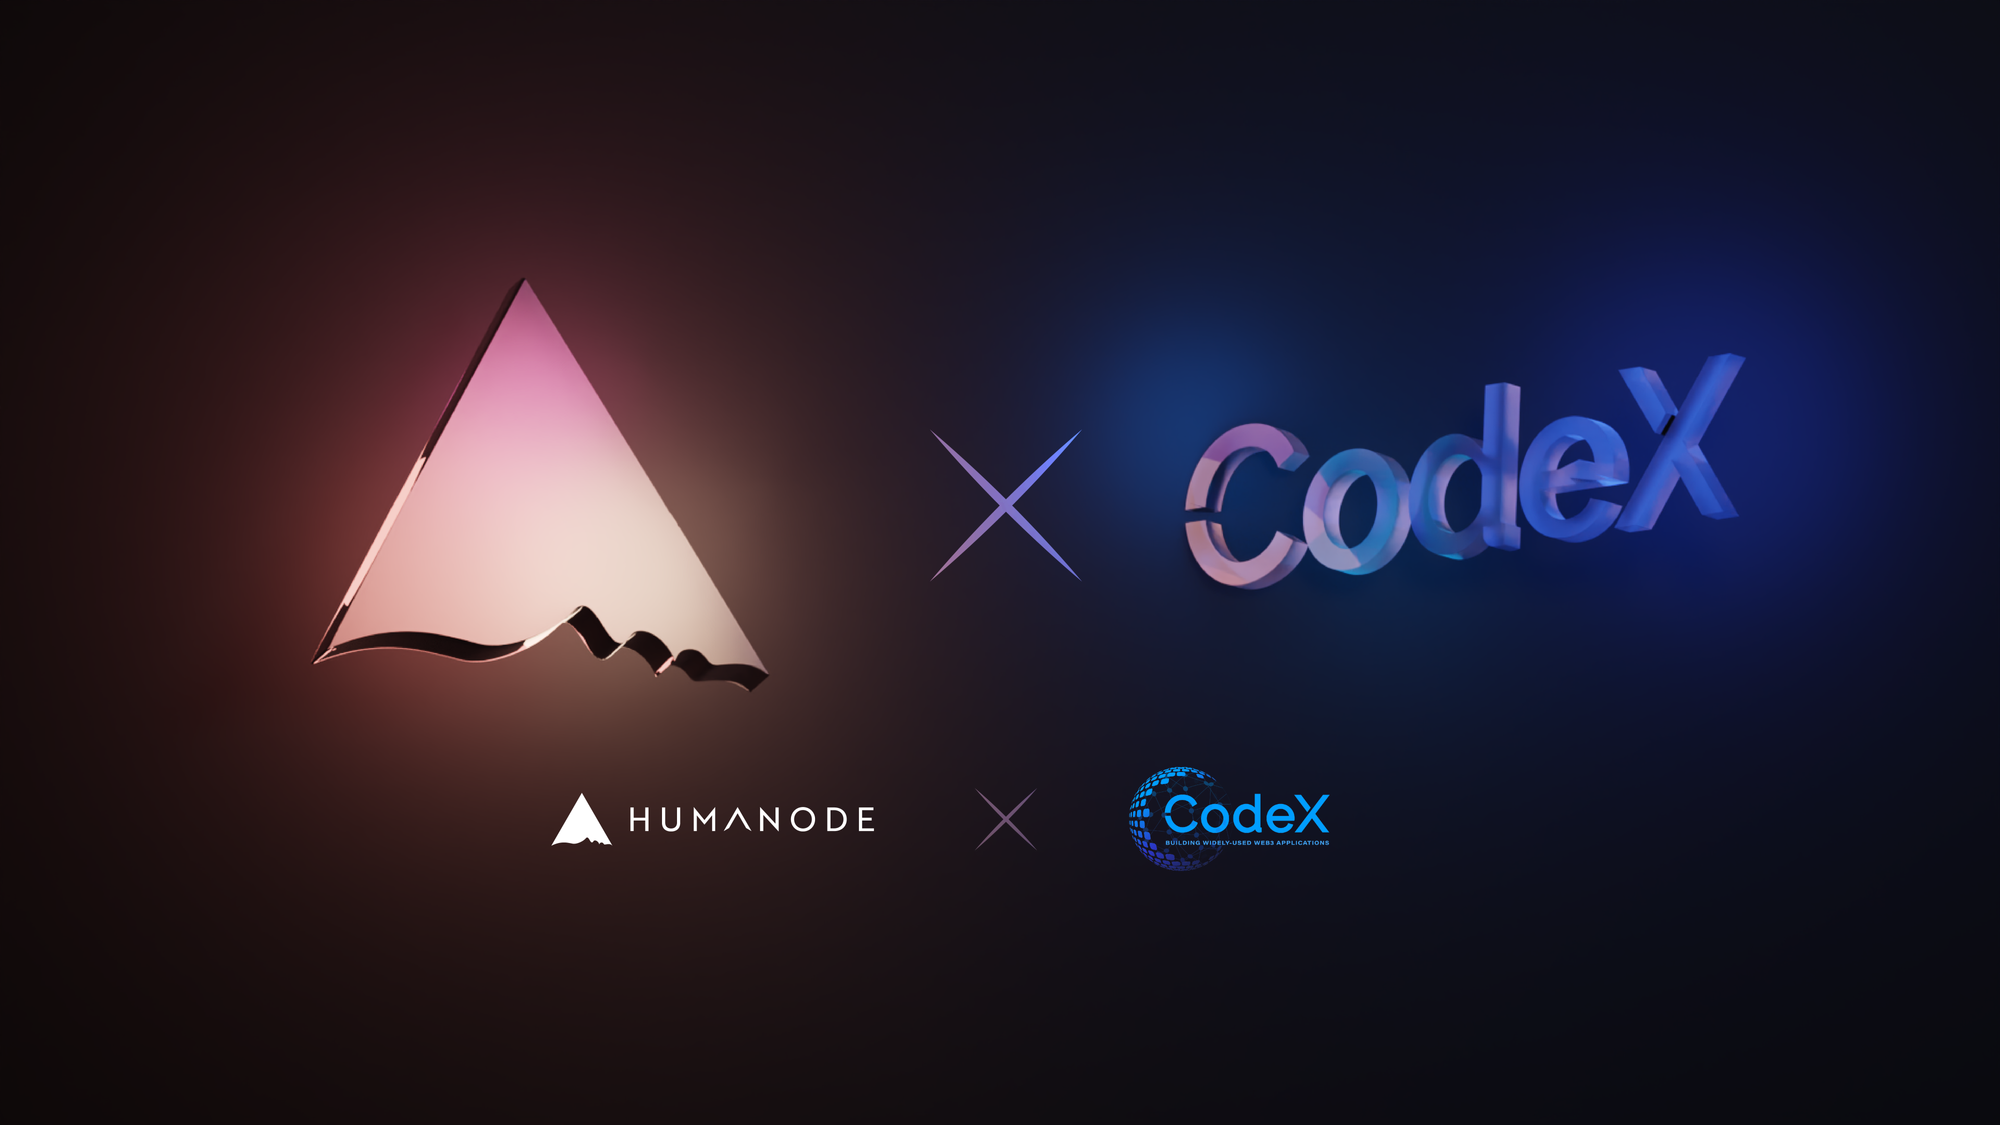 Humanode and CodeX announce partnership enabling No-code Sybil-resistant DApp development